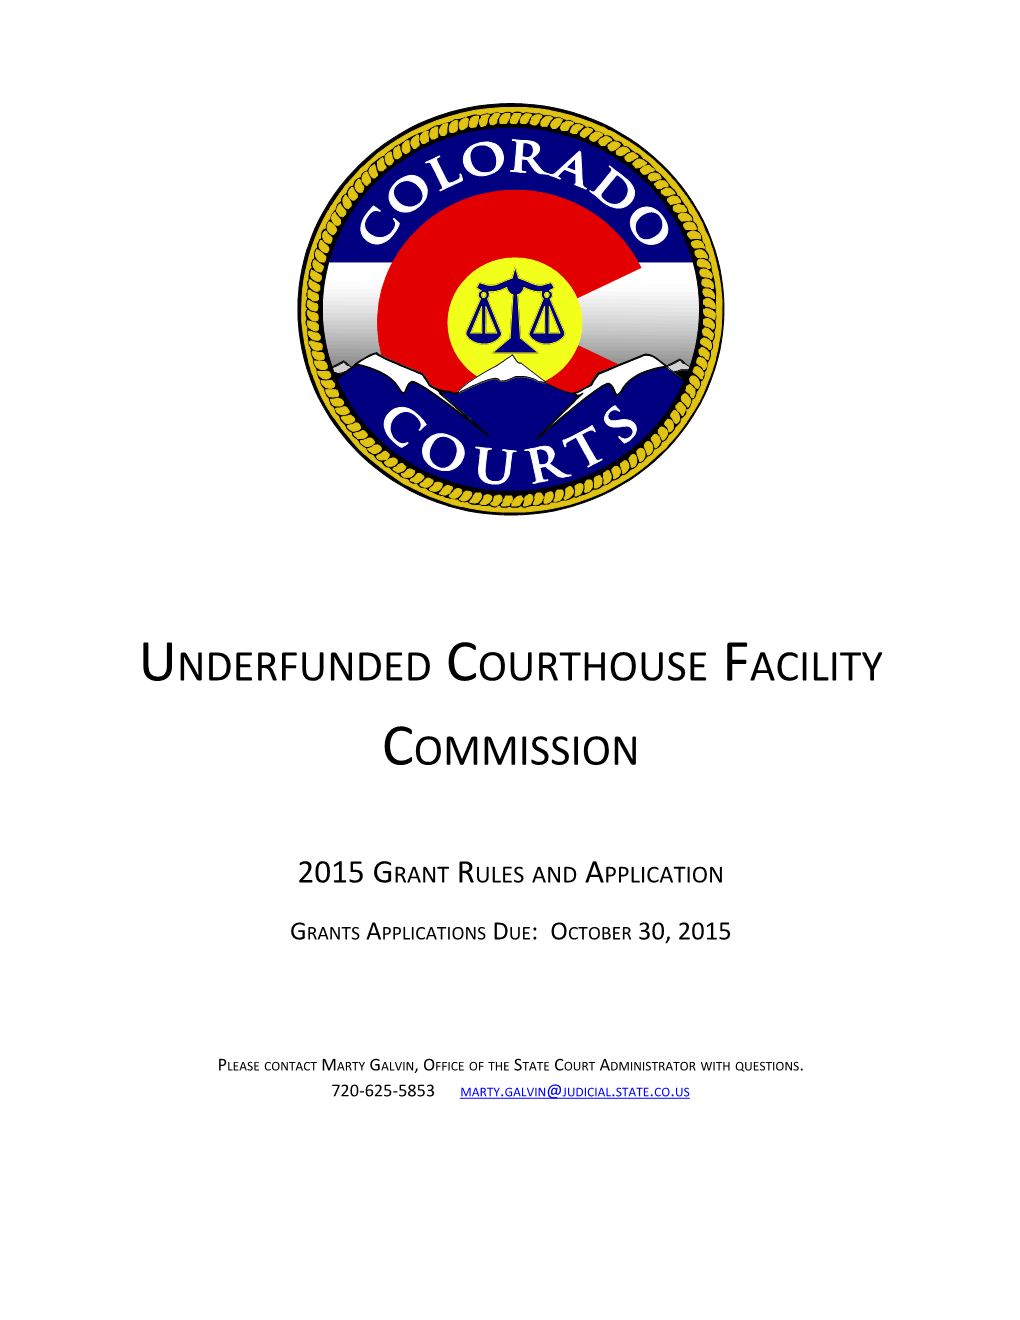 Underfunded Courthouse Facility Commission